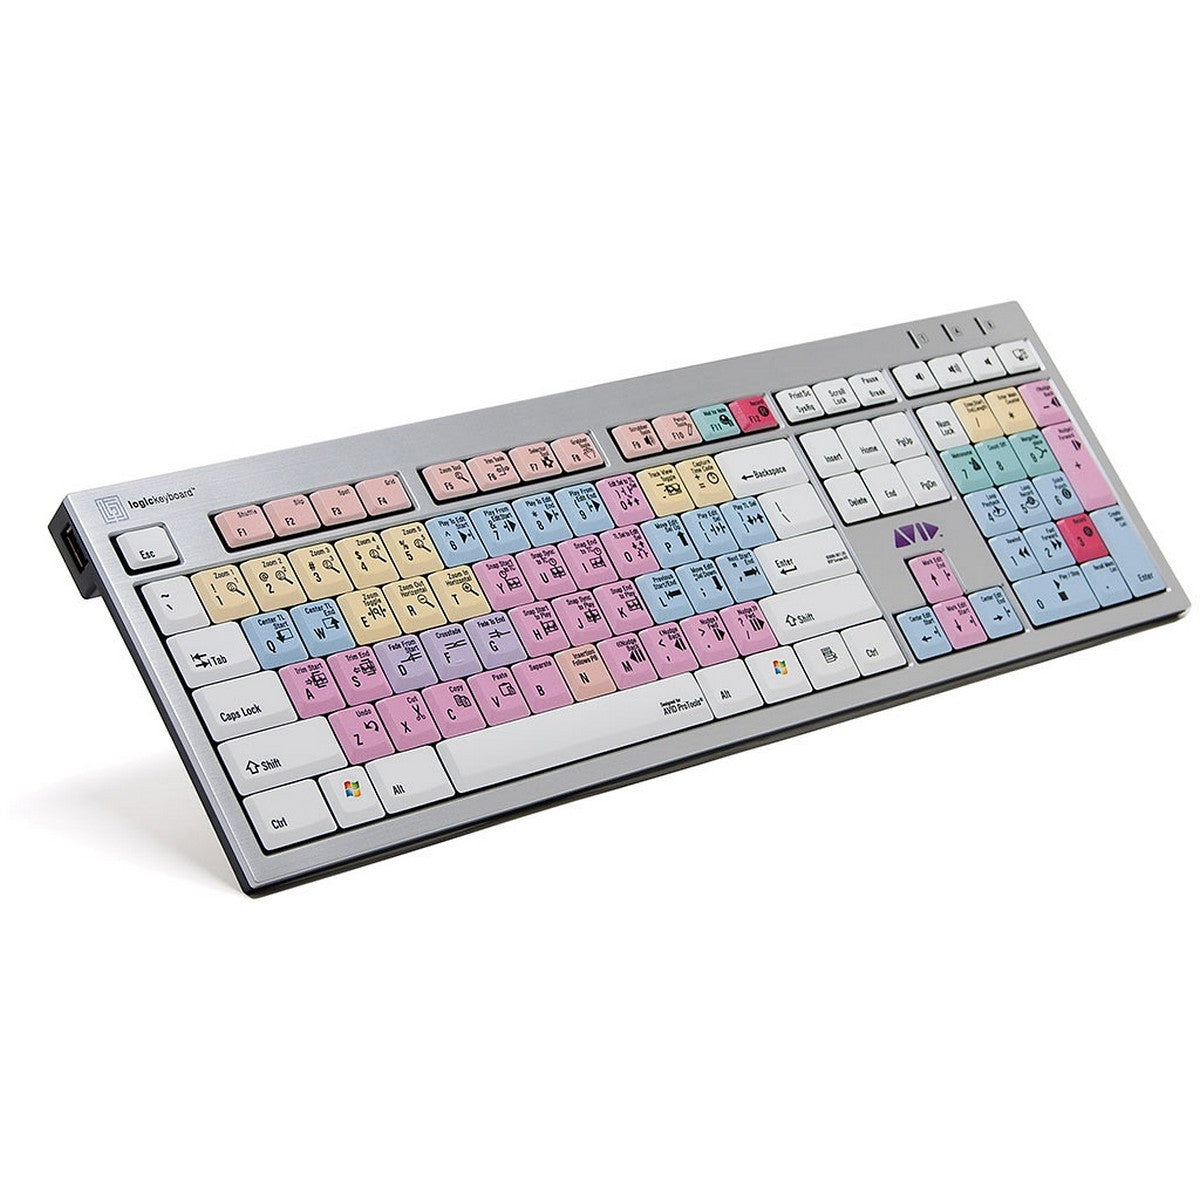 Logickeyboard Avid Digidesign Pro tools Slim Line PC Keyboard | Shortcut Printed Keyboard for Avid Pro Tools